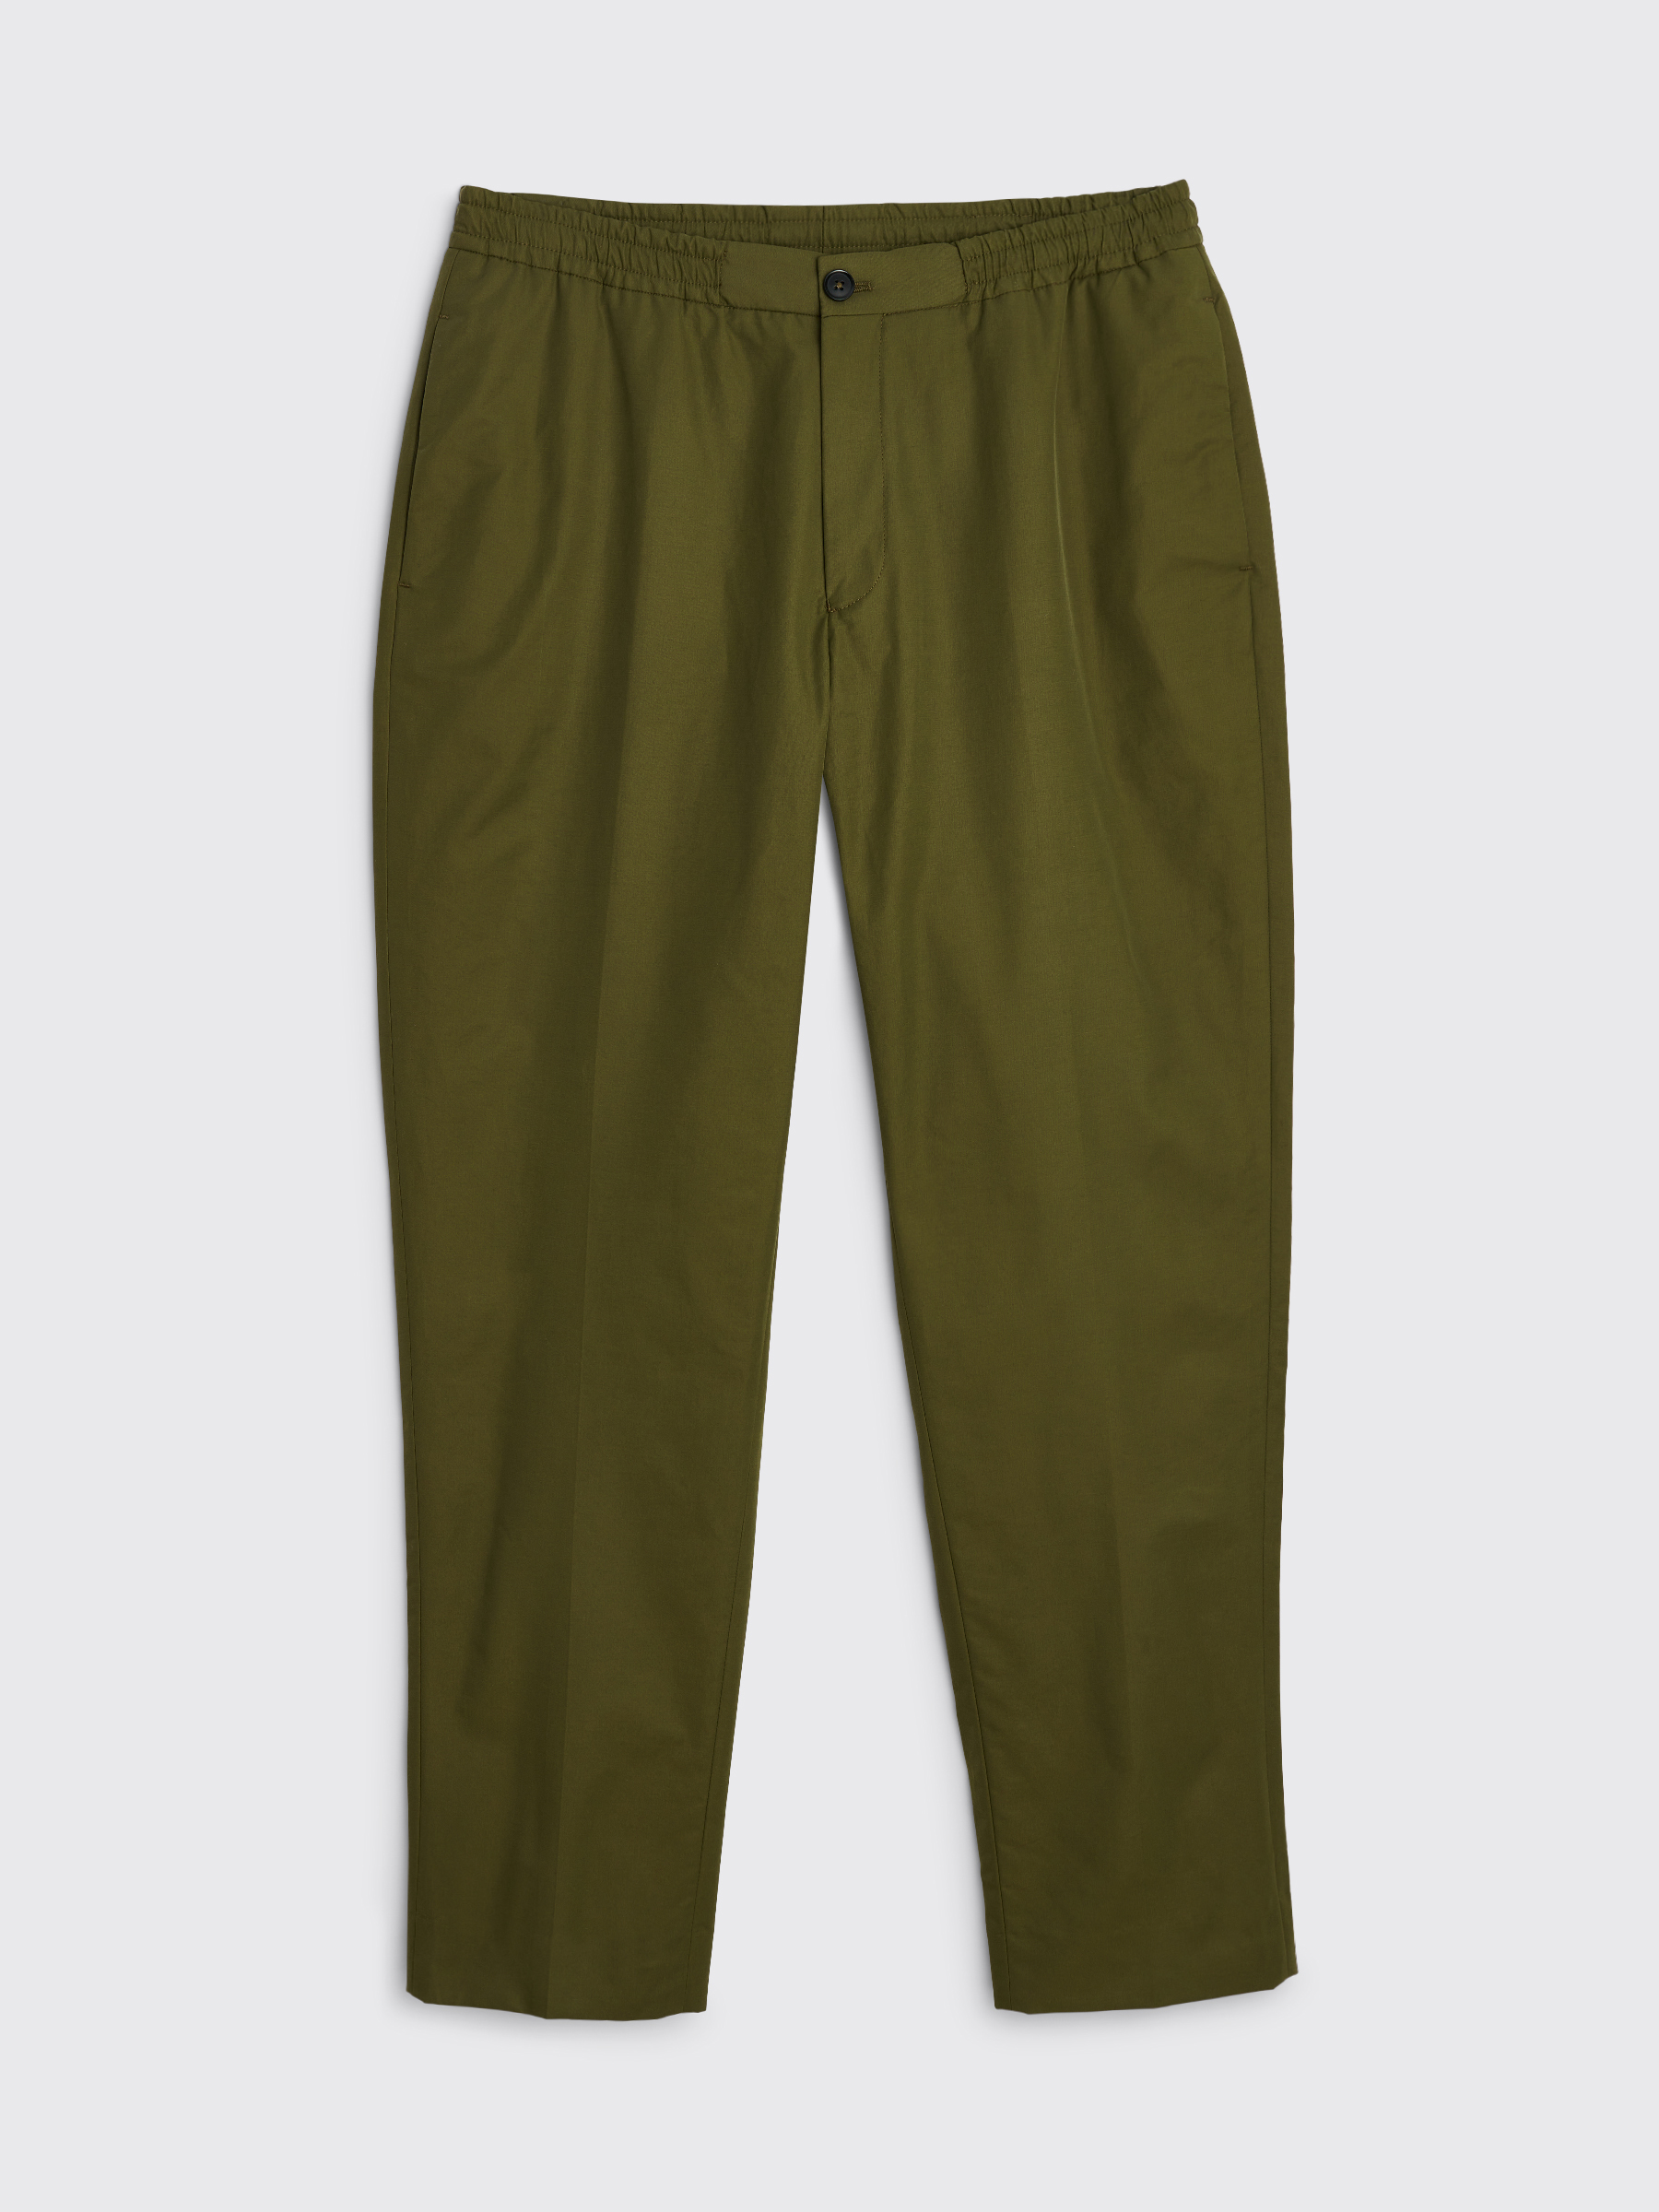 Très Bien - TRÈS Pants Sport Drawstring BIEN Green everywear